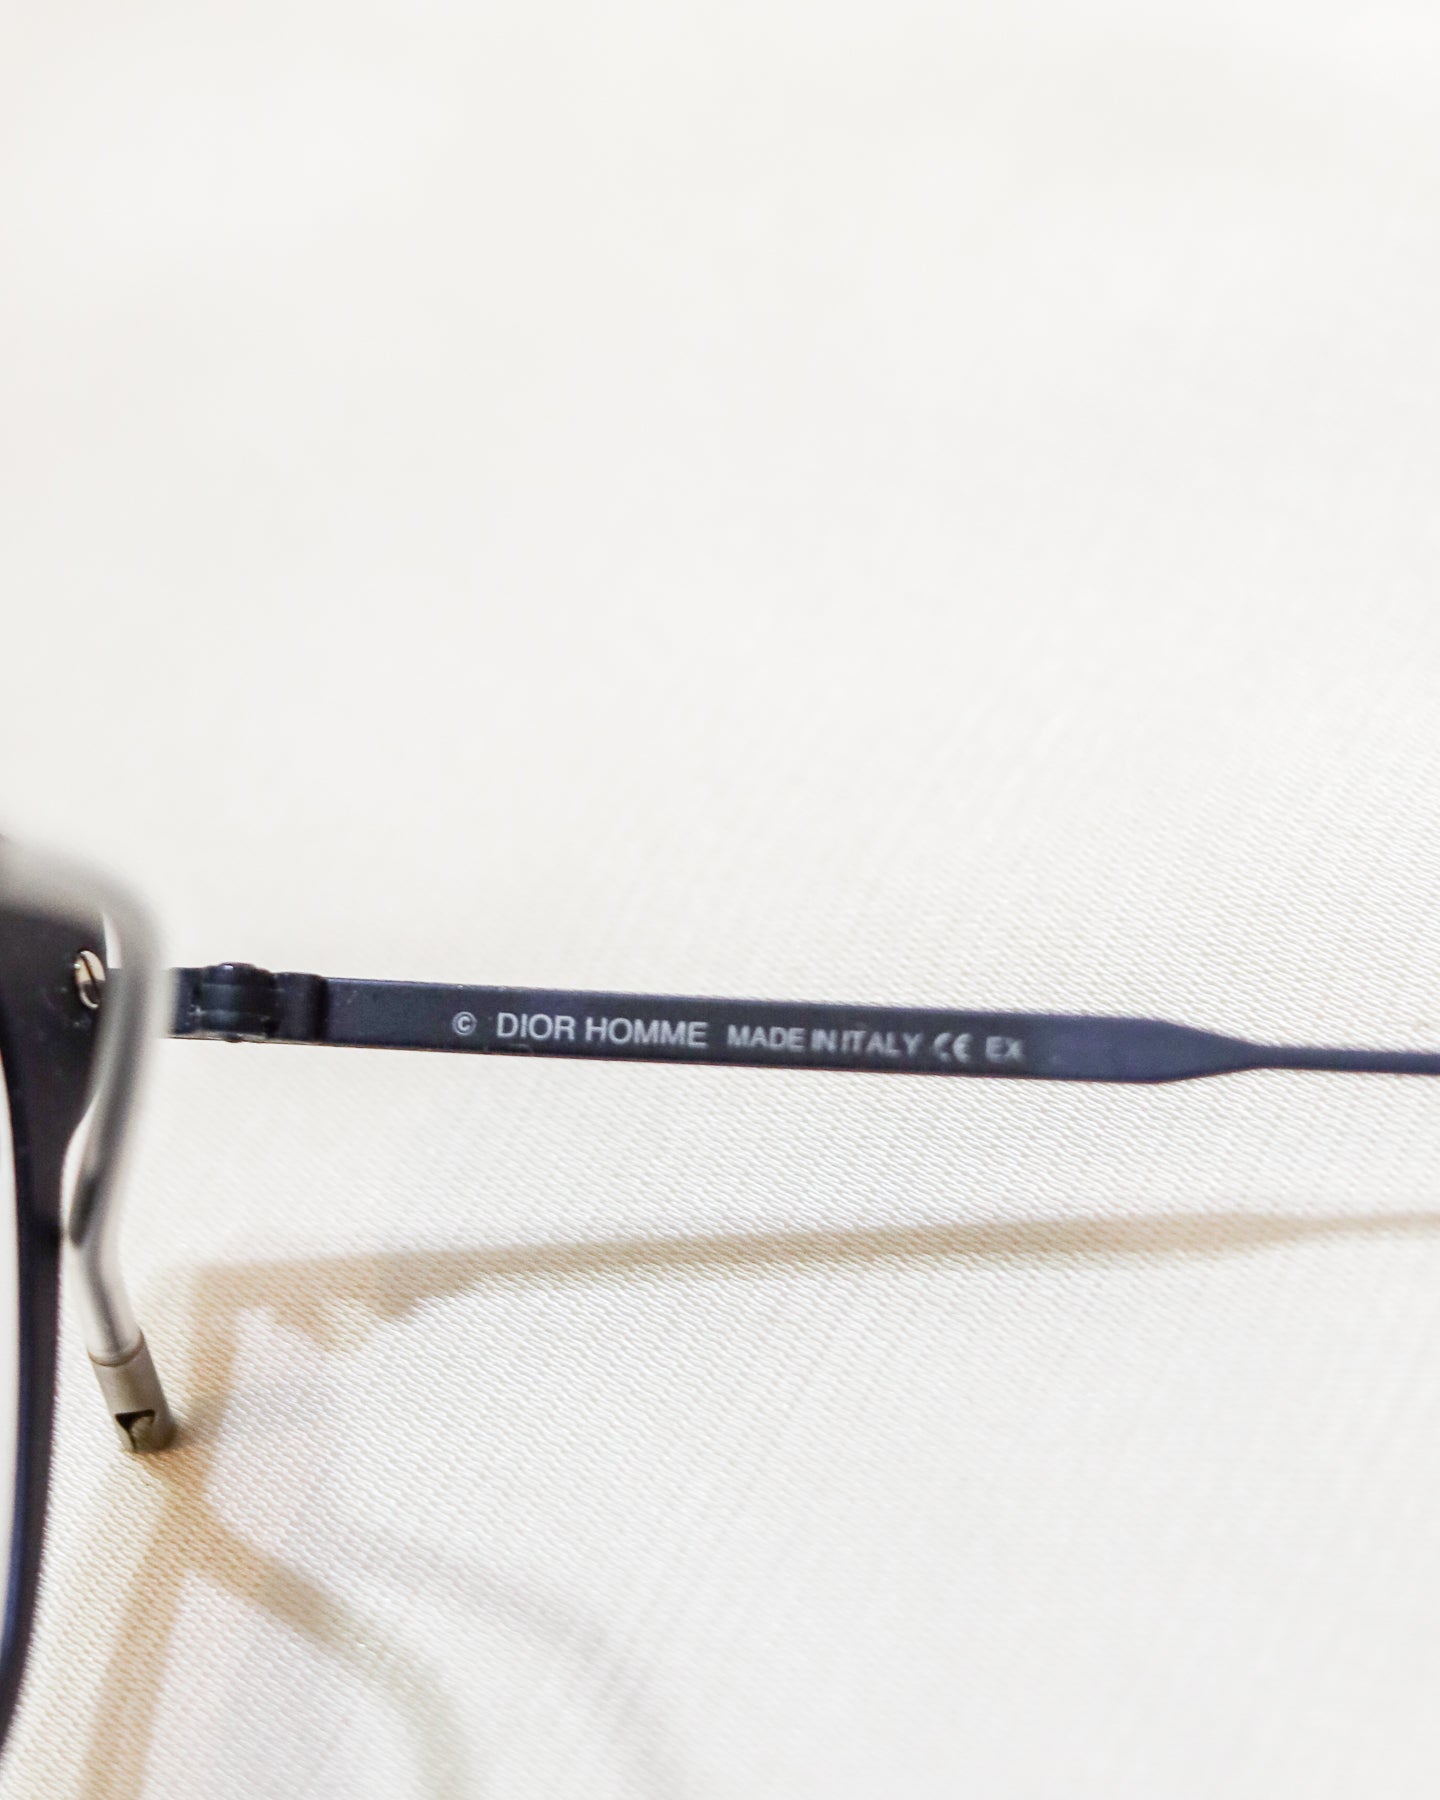 Christian Dior Blue Wayfarer Sunglasses - with box